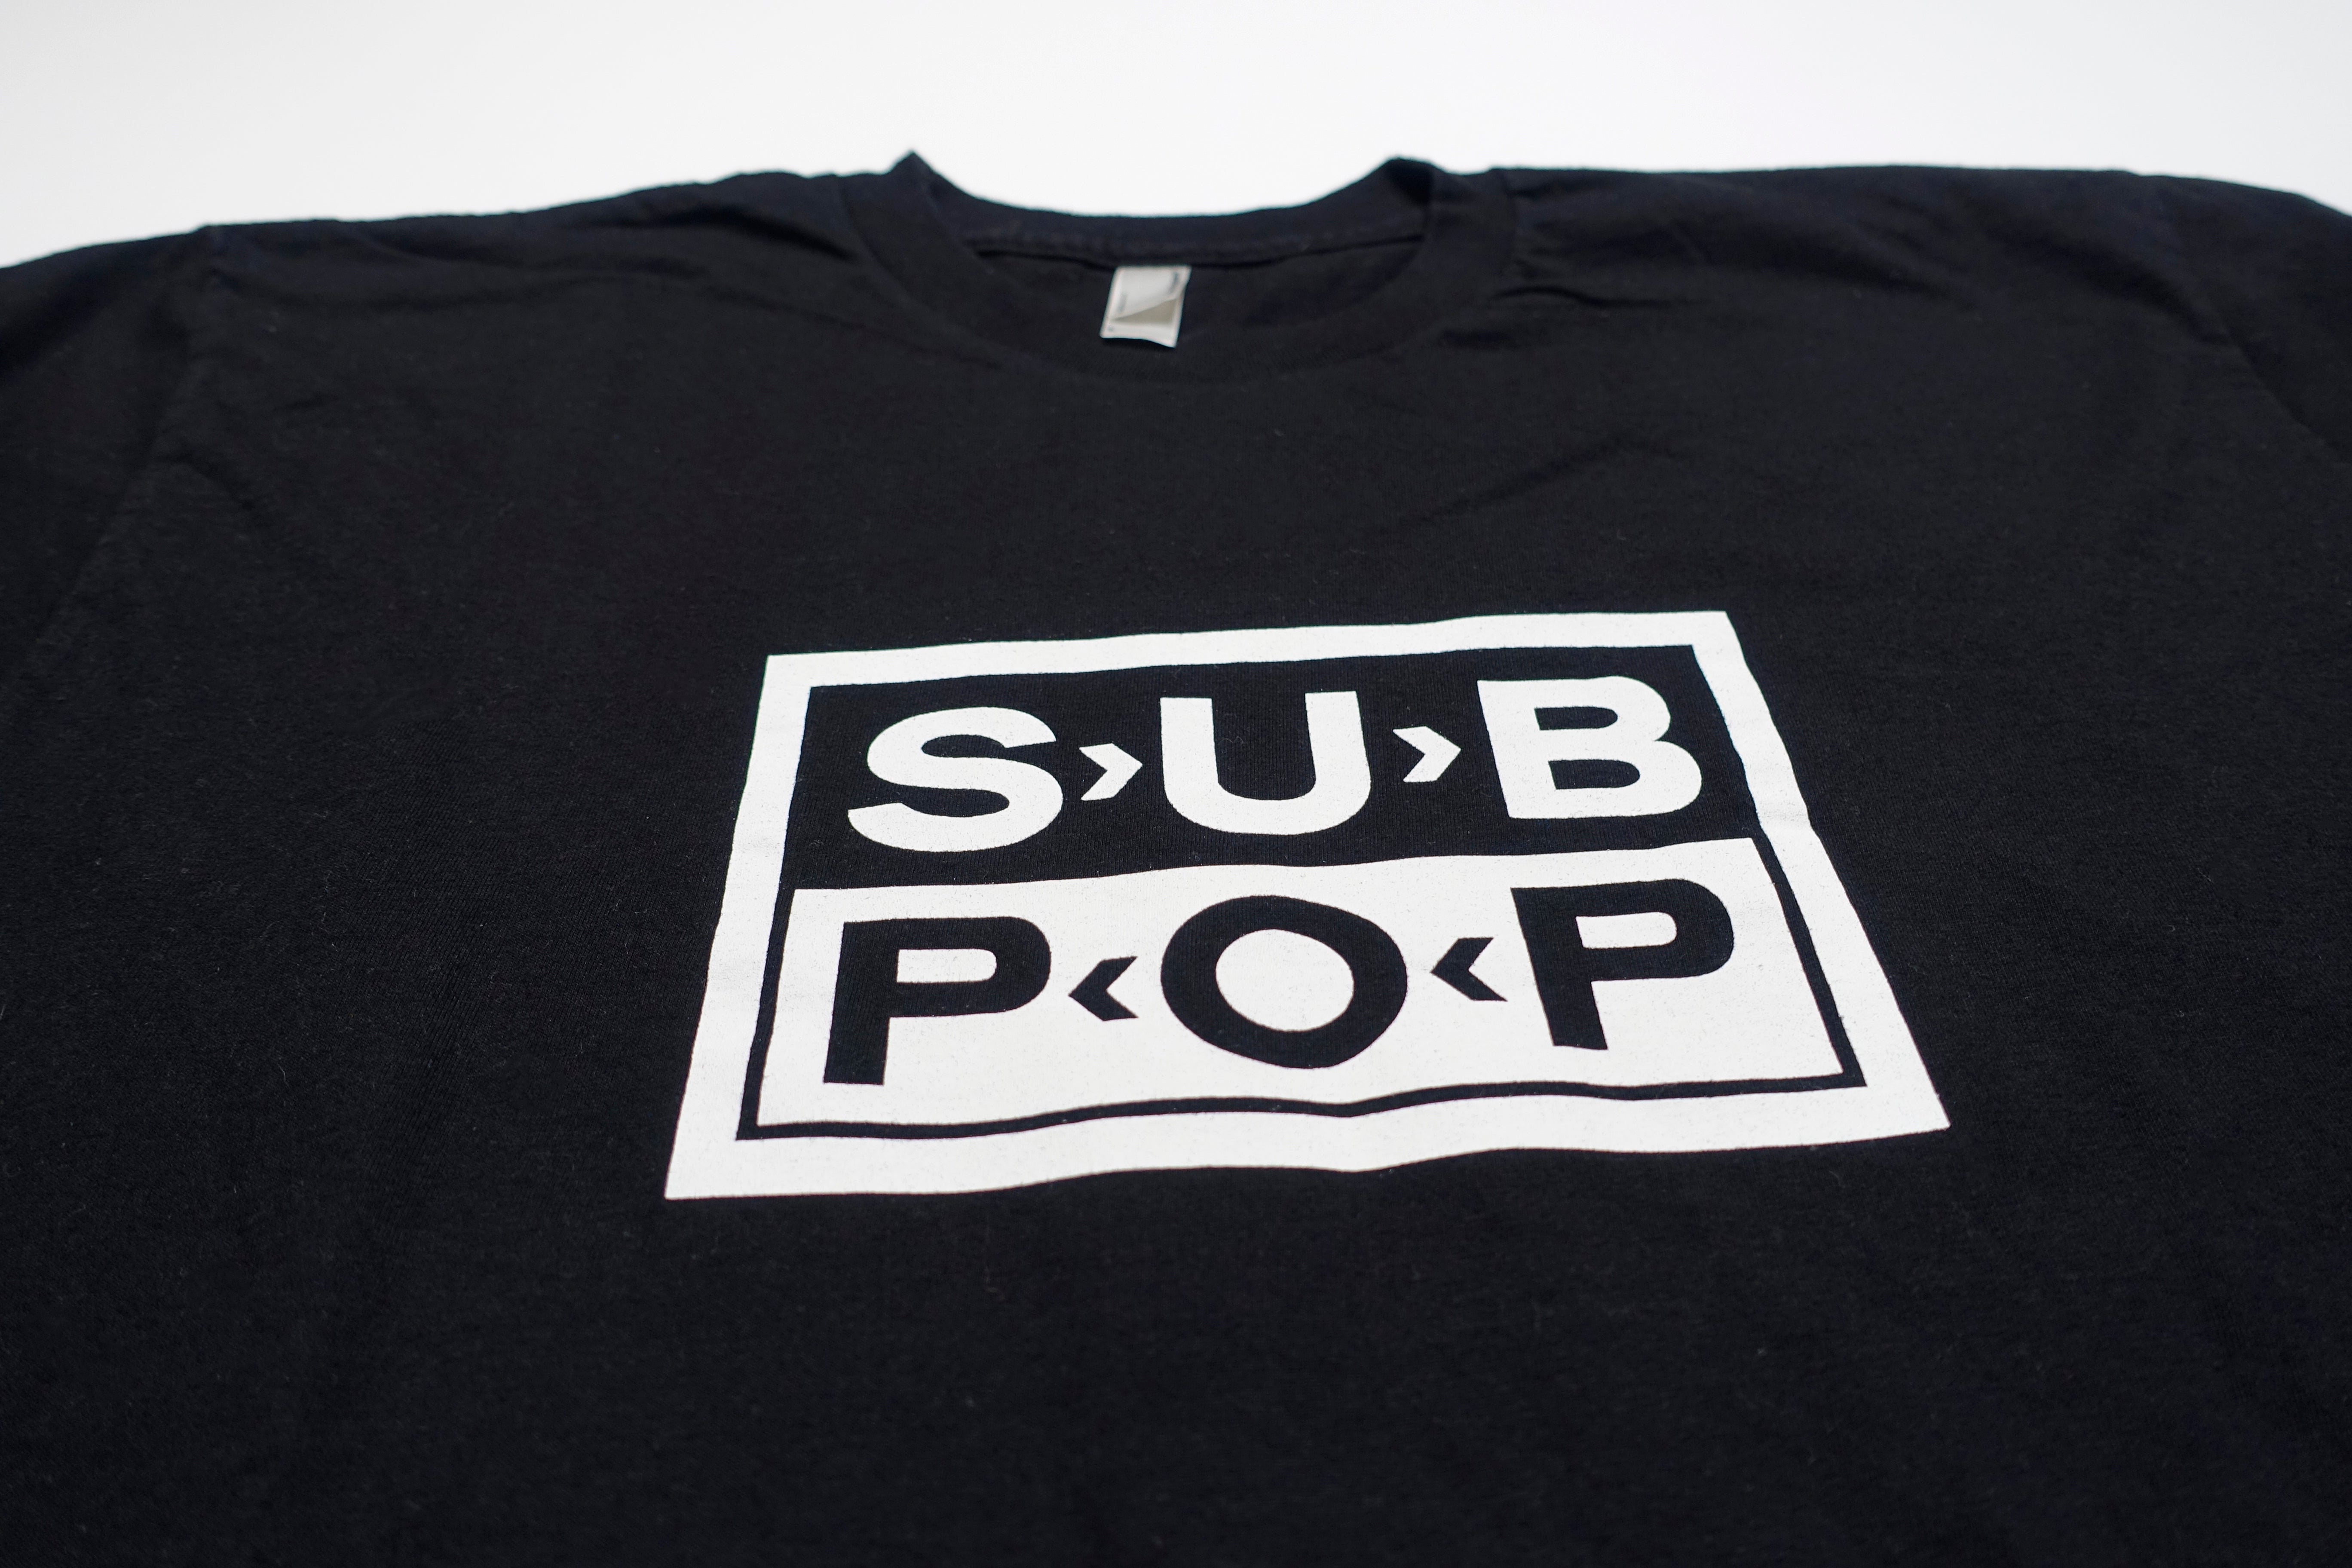 Sub Pop Records - Classic Logo Shirt Size Large